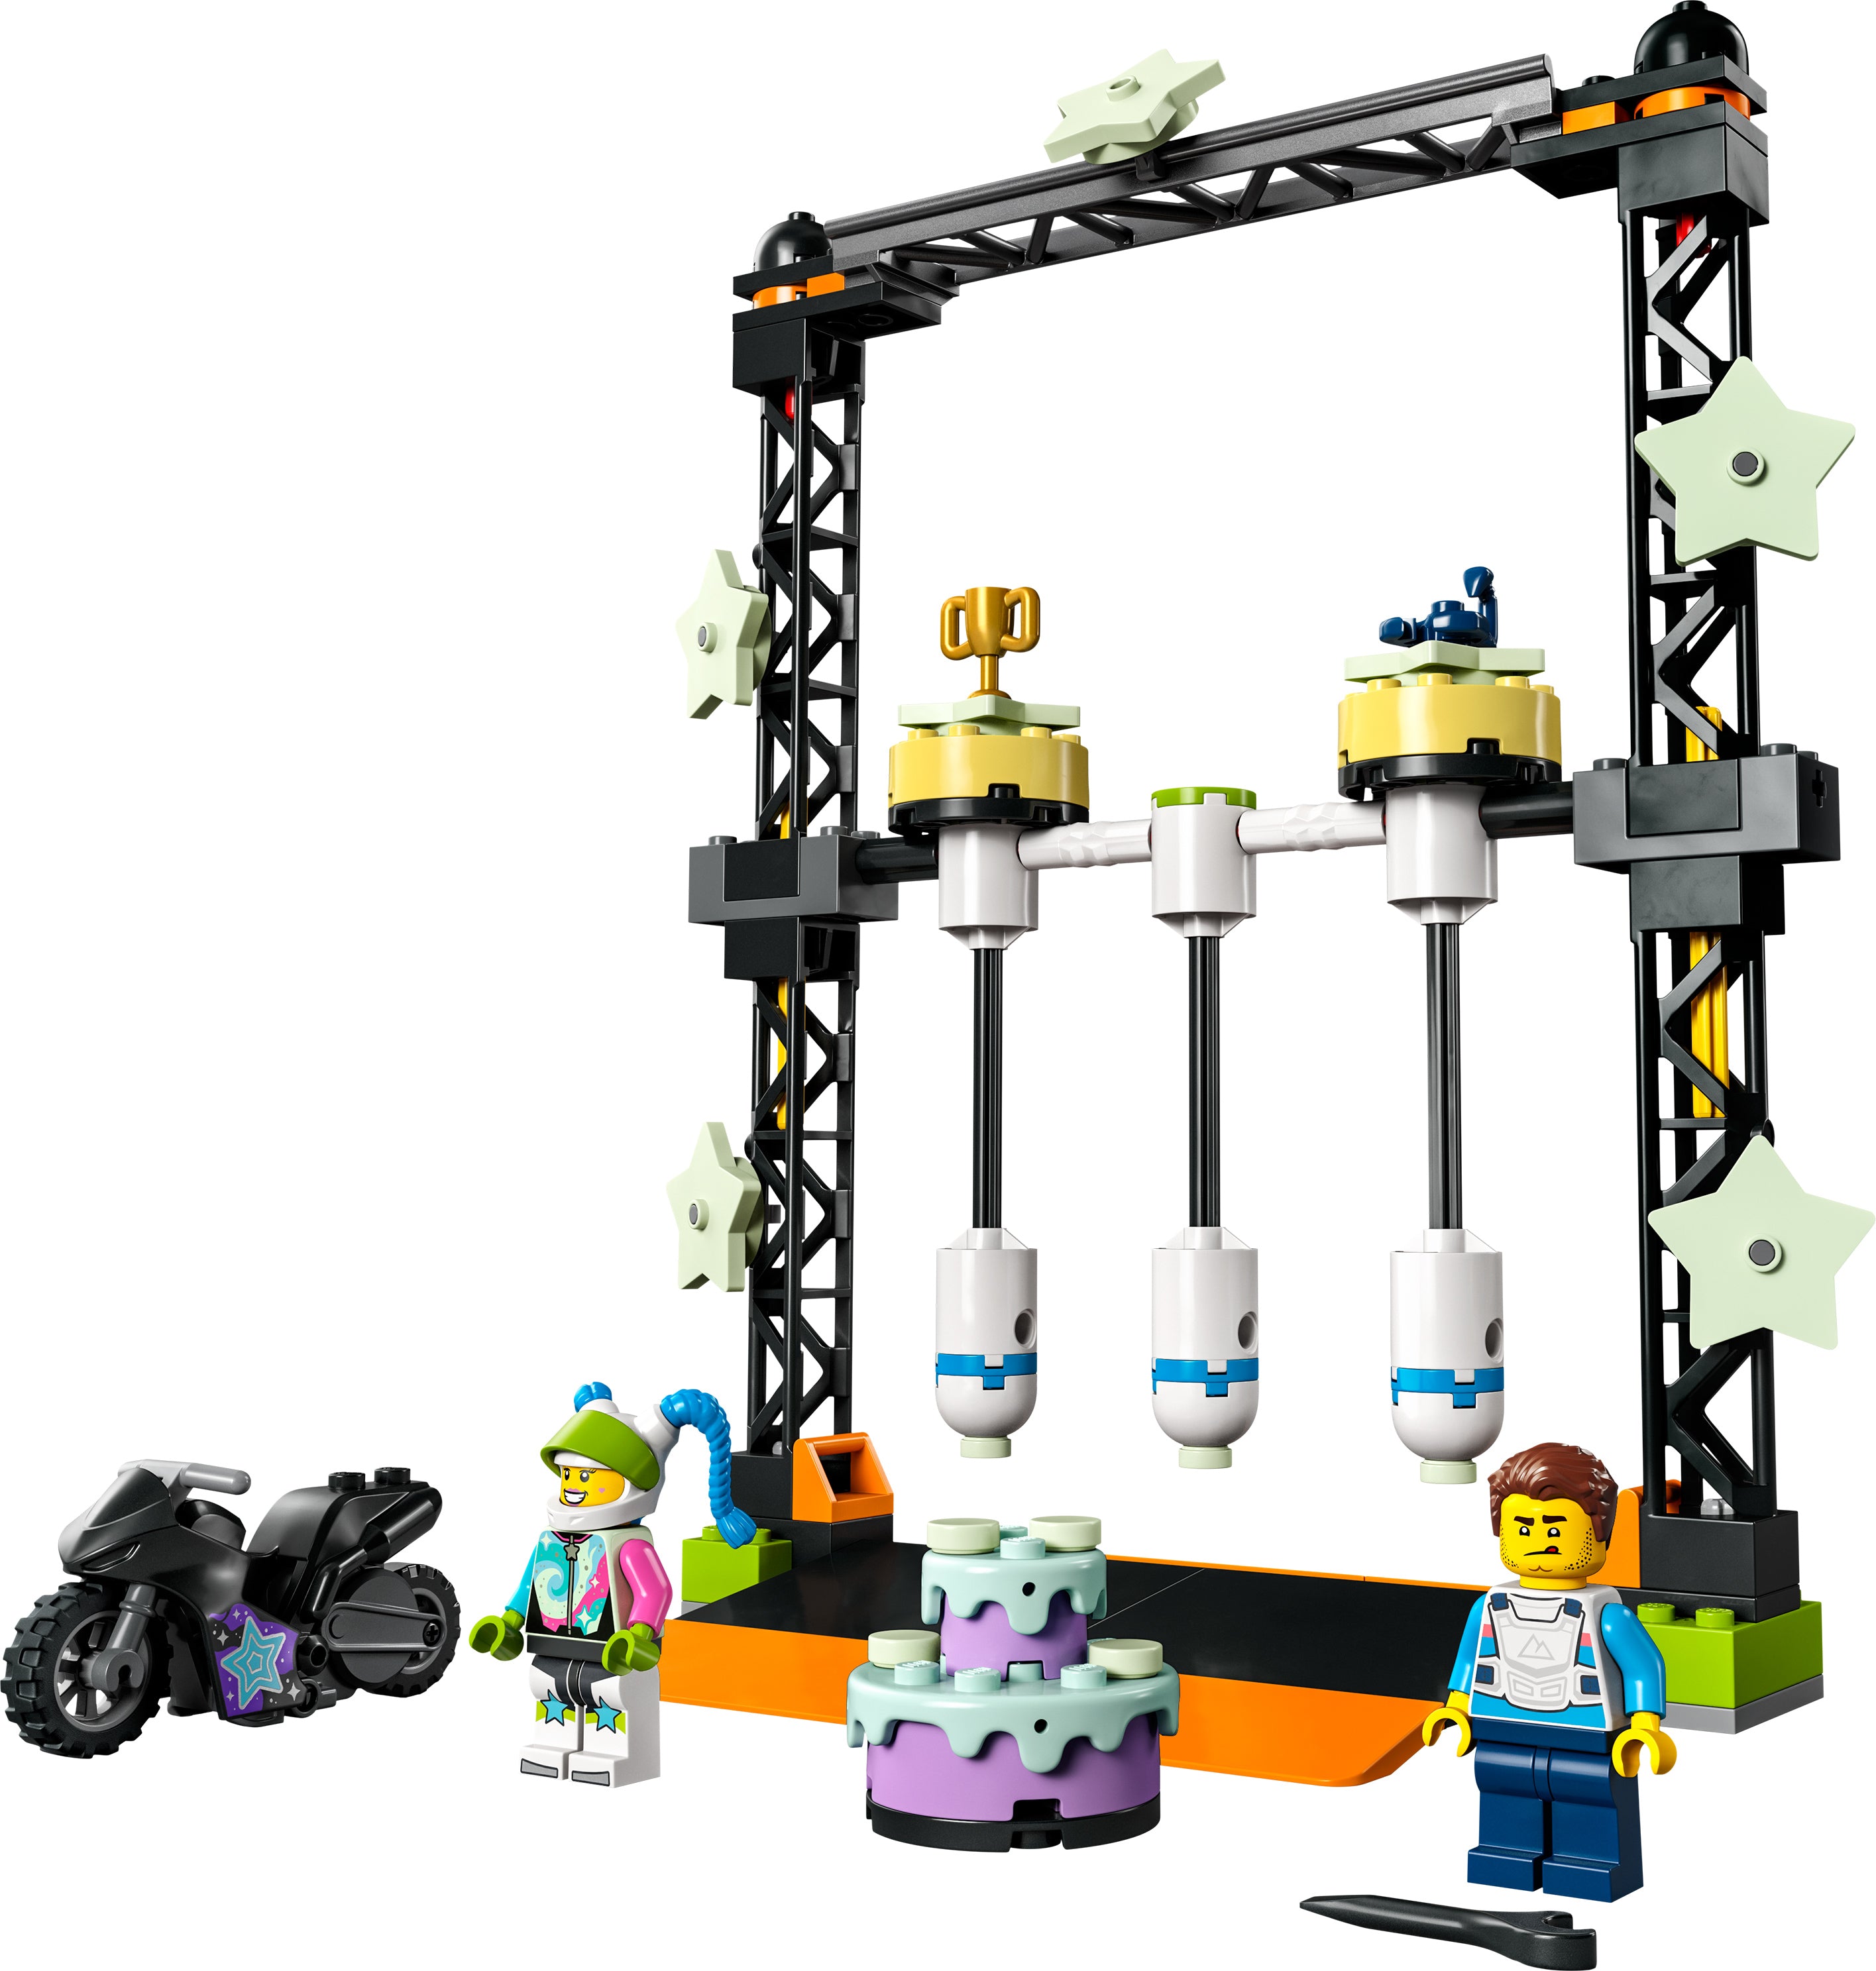 LEGO City The Knockdown Stunt Challenge 60341